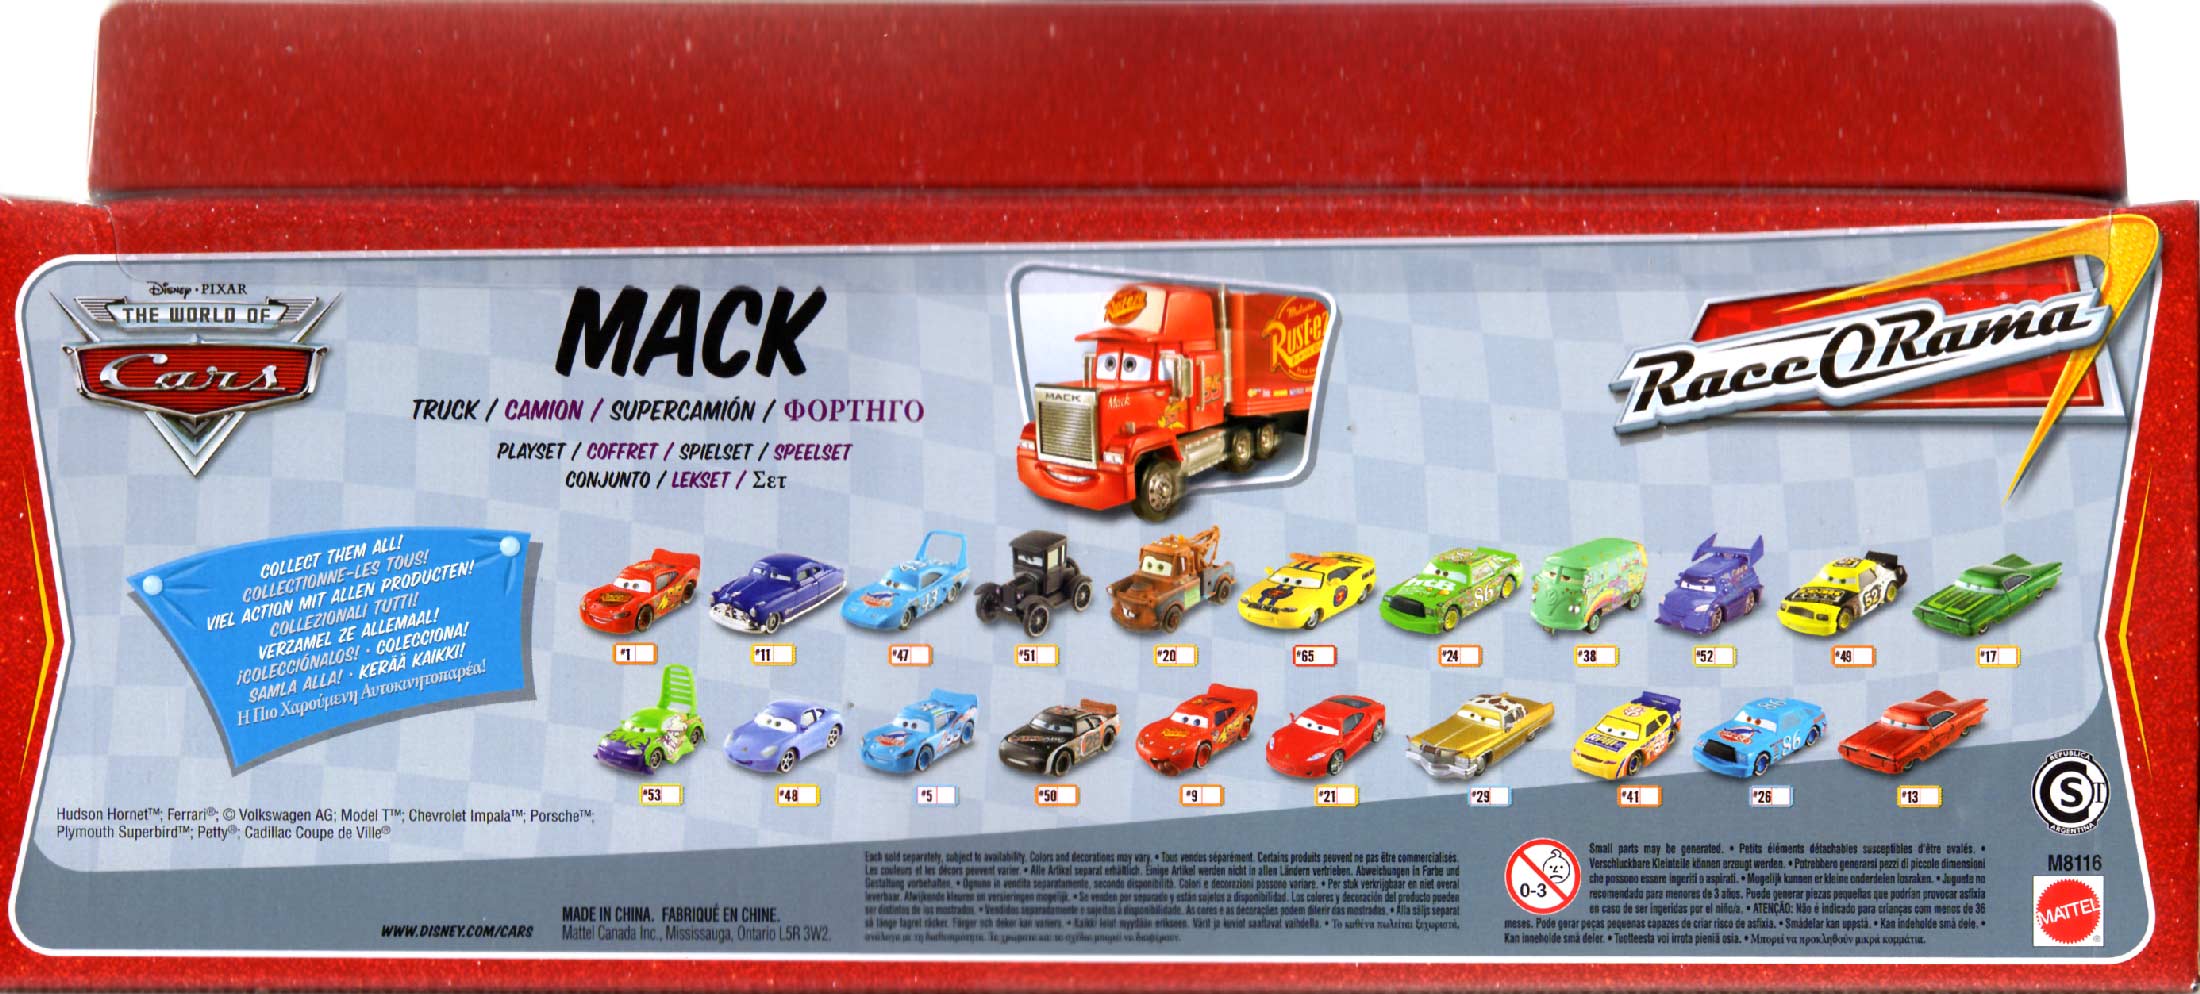 Mack - Cars - Mattel (Packaging dos)